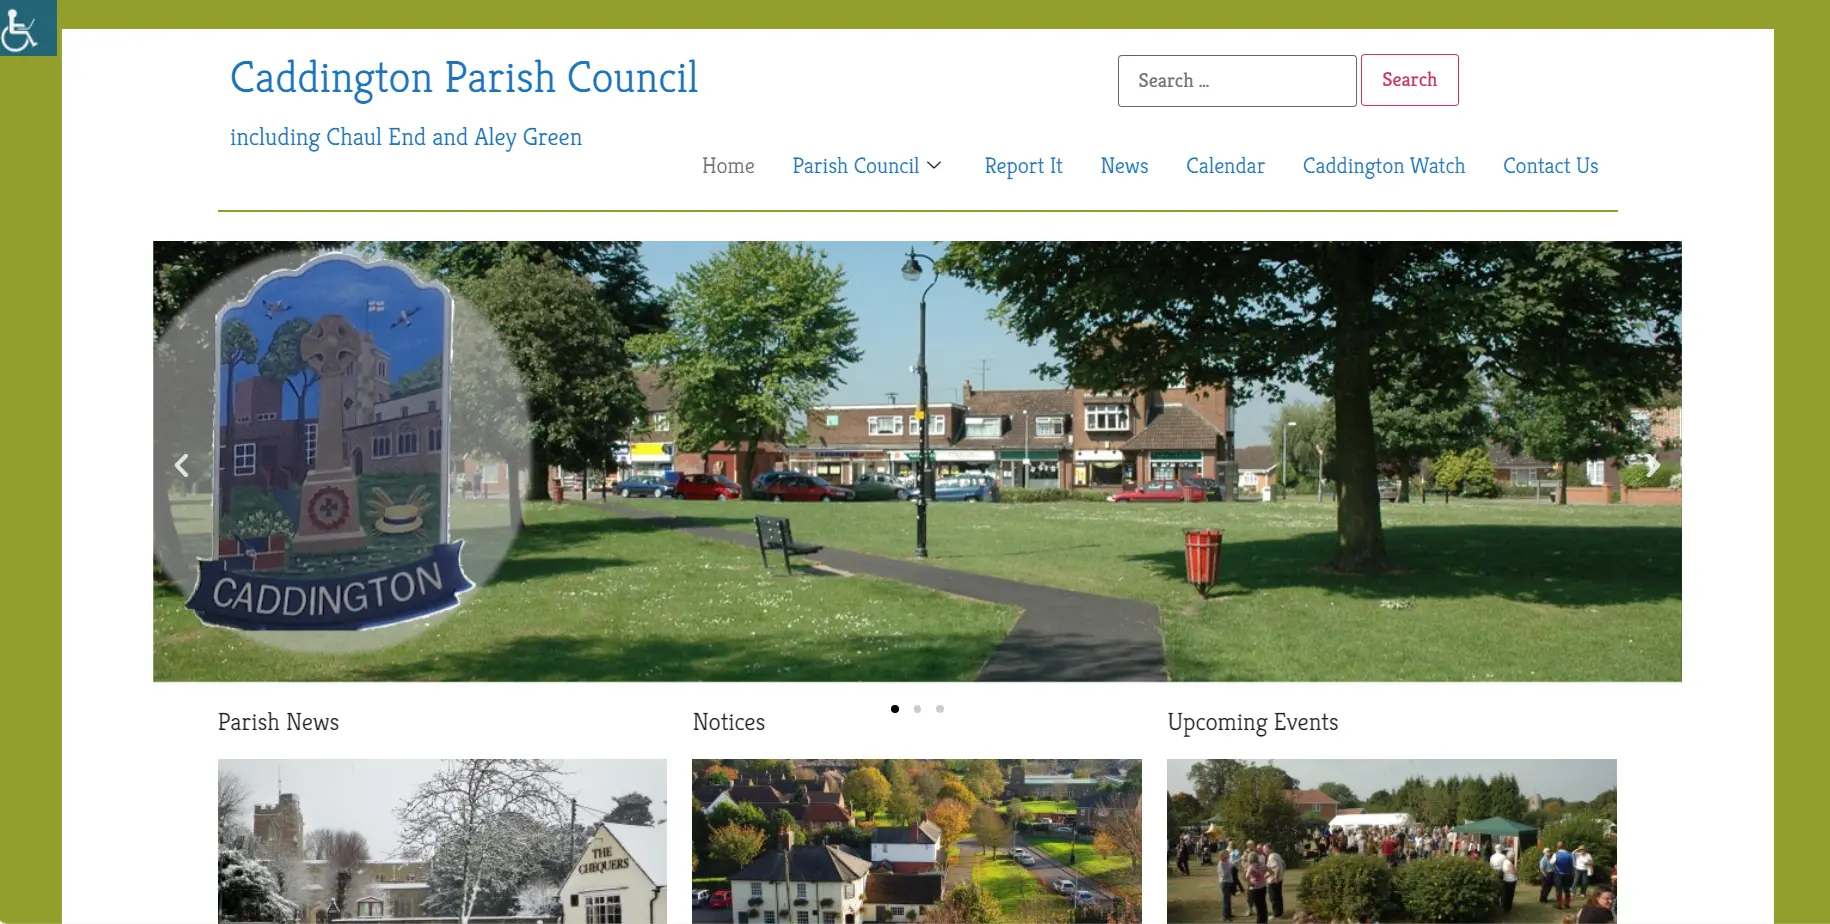 Caddington Parish Council Website Portfolio Showcase